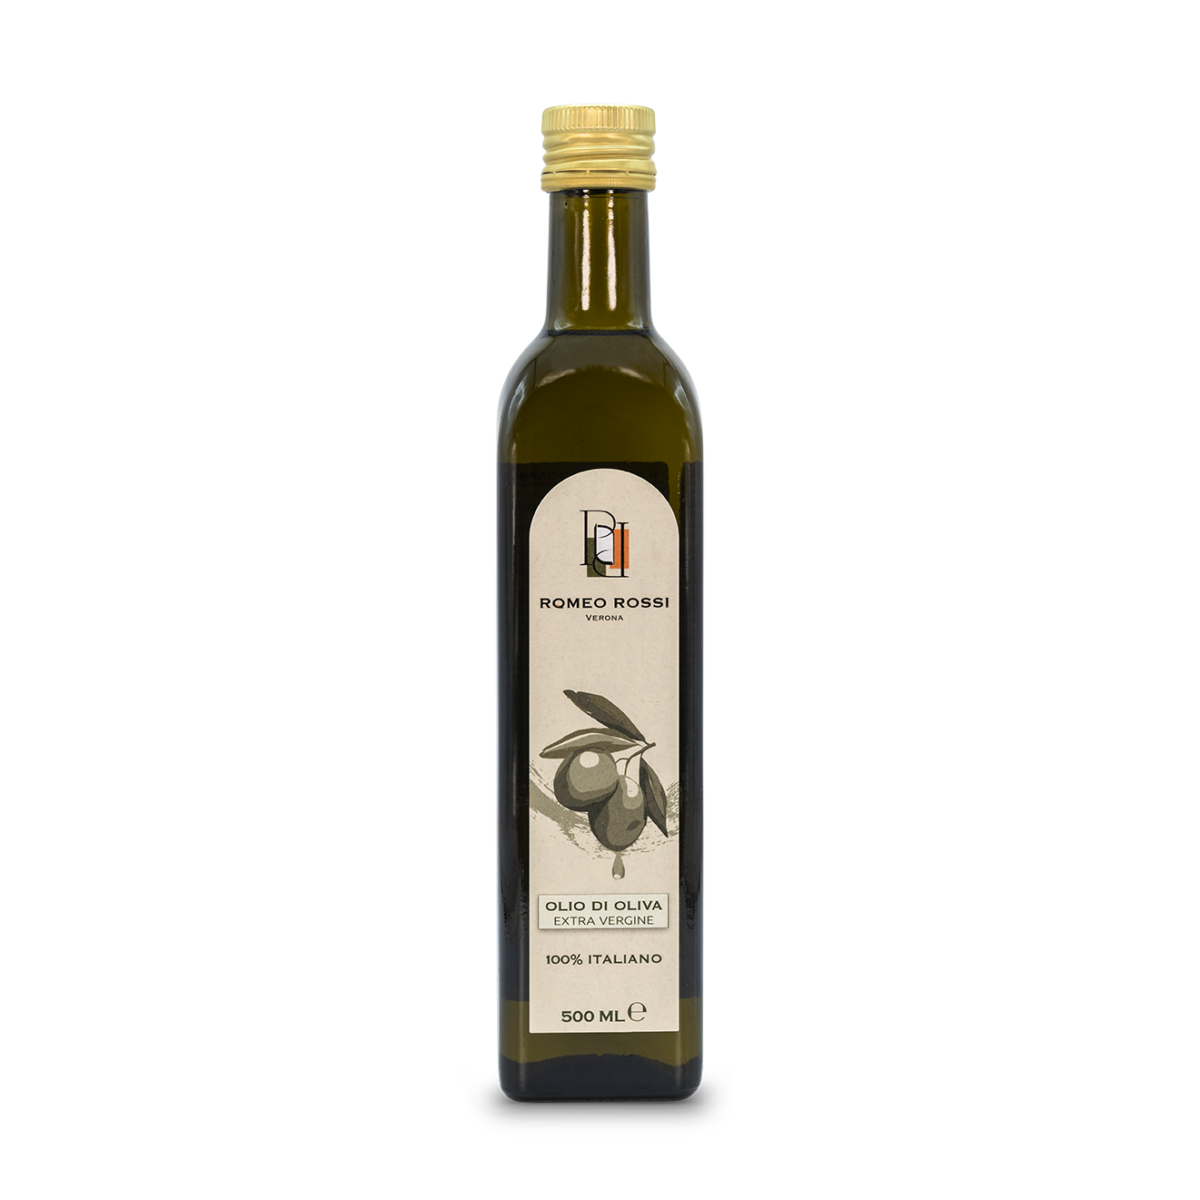 Оливковое масло olio Extra Verginiya di Oliva, 1000 мл. Carapelli 100 Italian Extra Virgin Olive. Olio di Sansa di Oliva конди. Масло оливковое Гранд ди олива нераф 500мл.